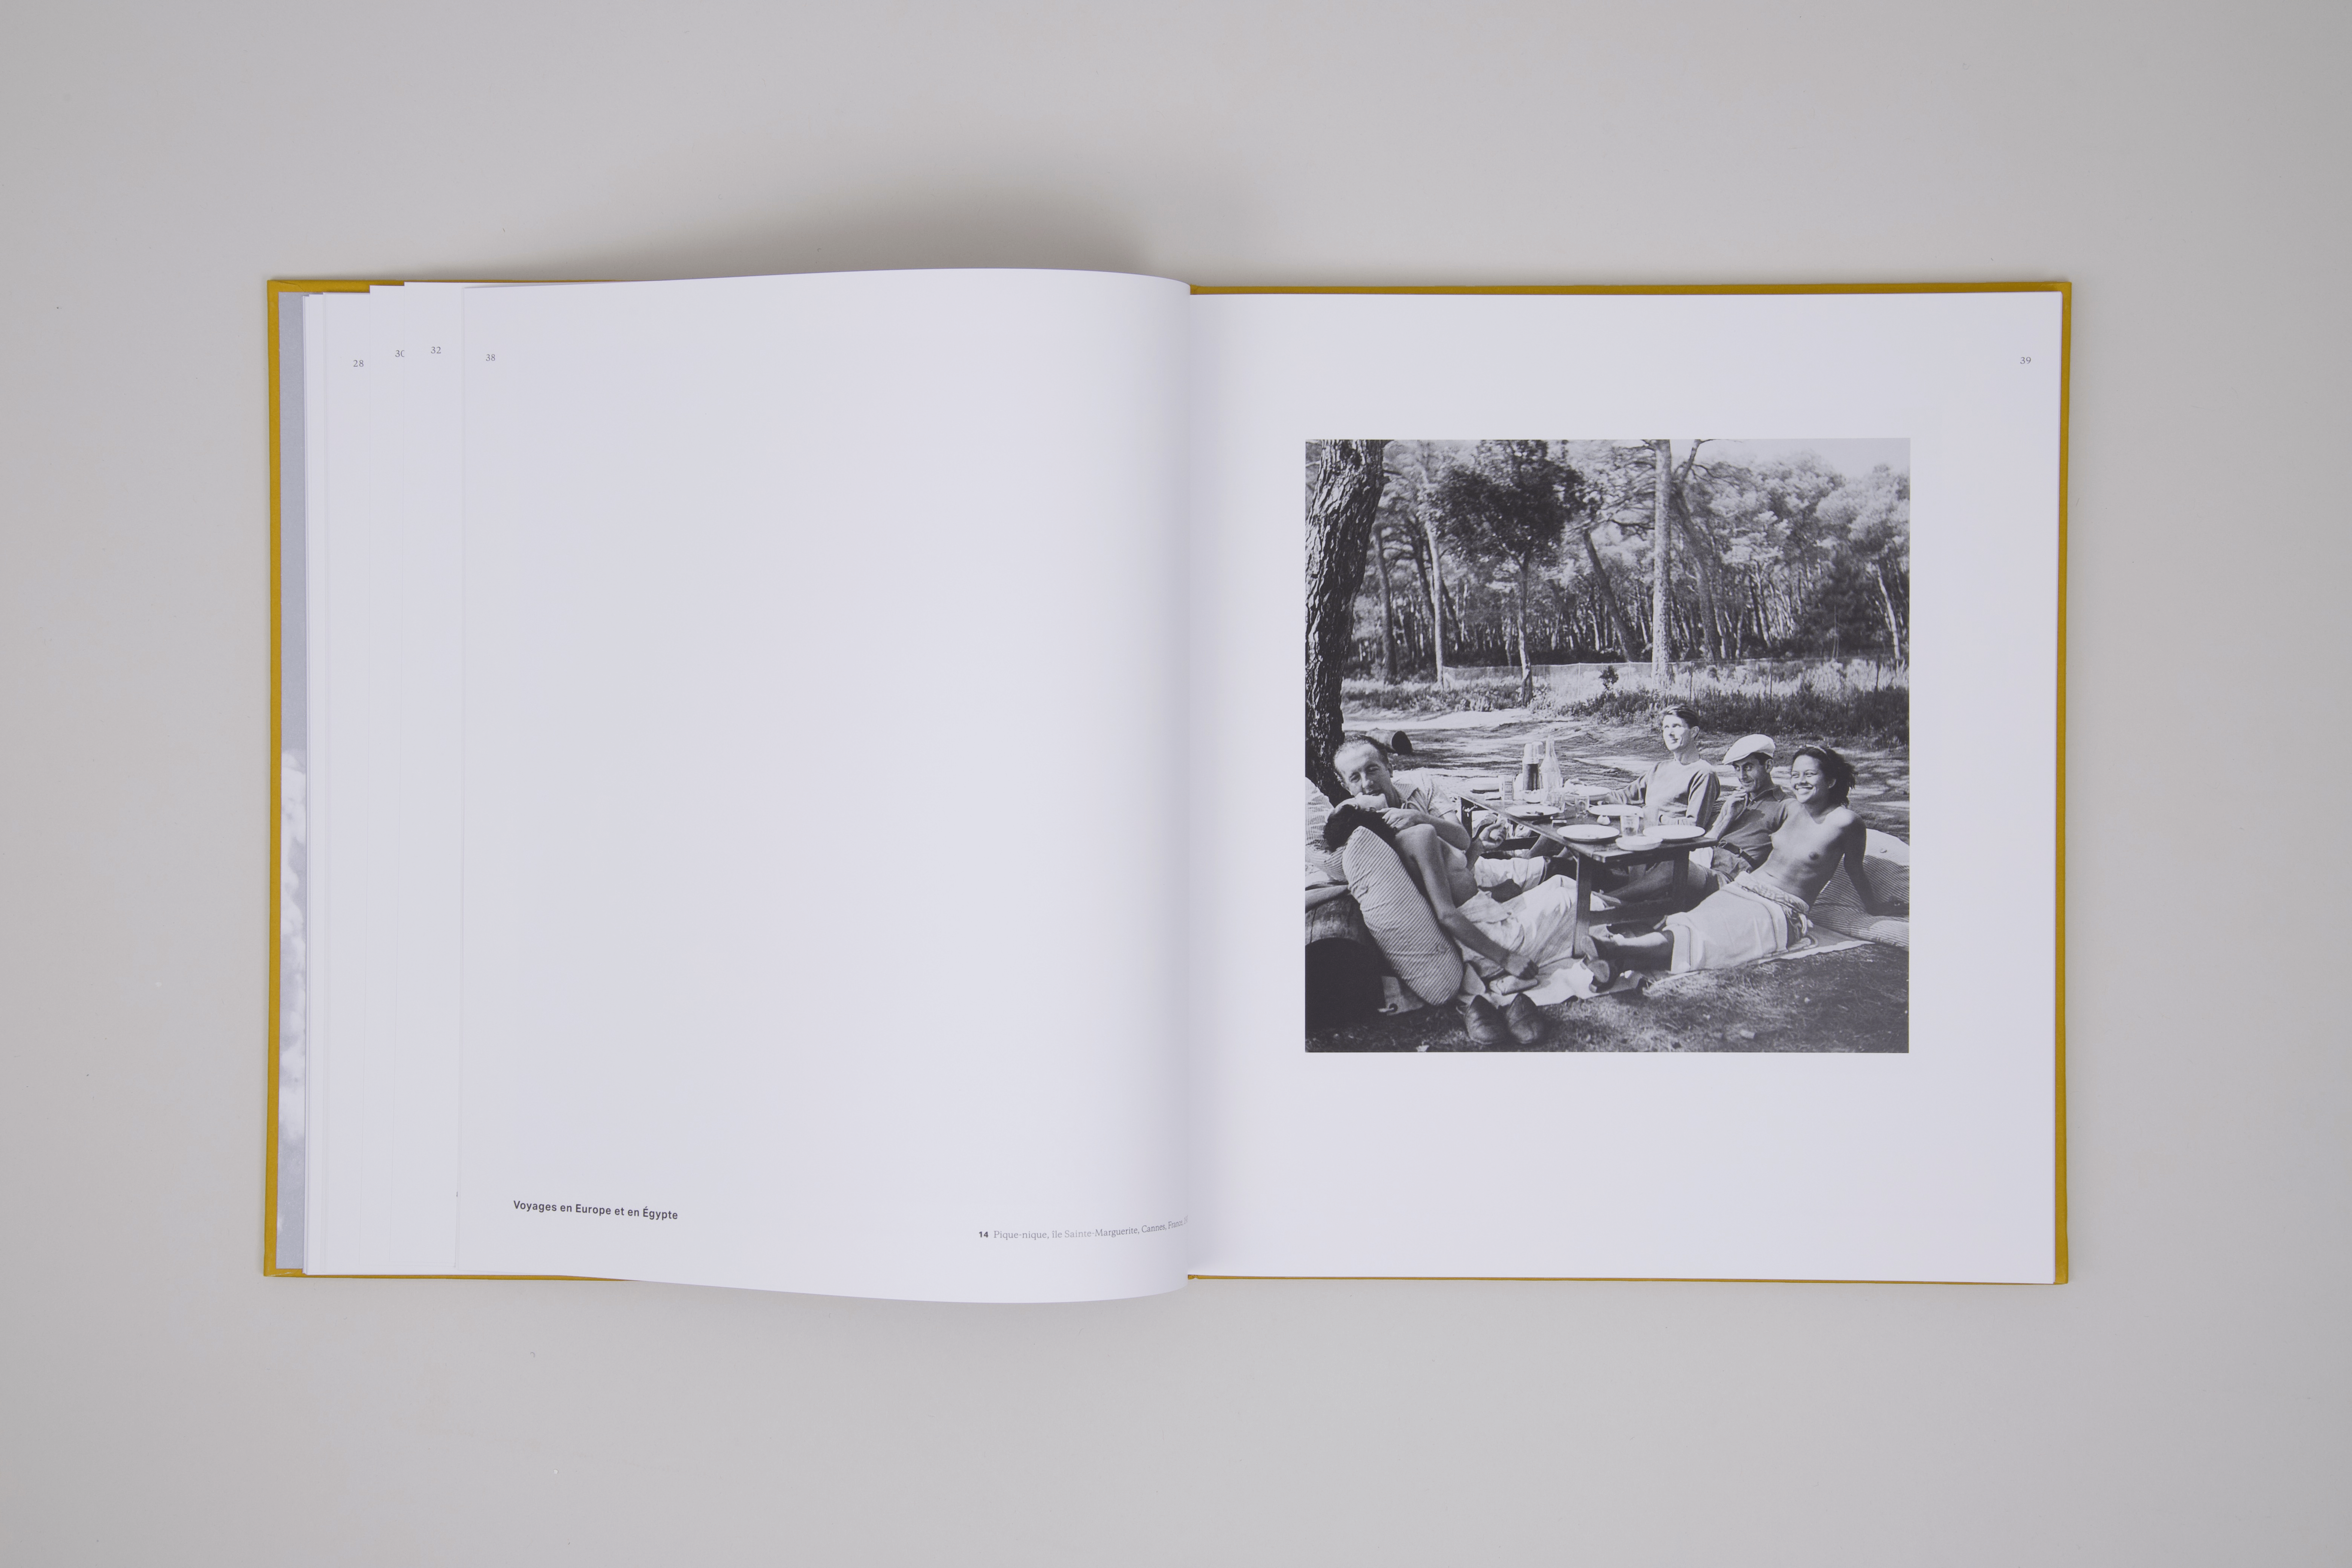 Lee Miller. Photographies Lee Miller / Antony Penrose / Kate Winslet -  delpire & co